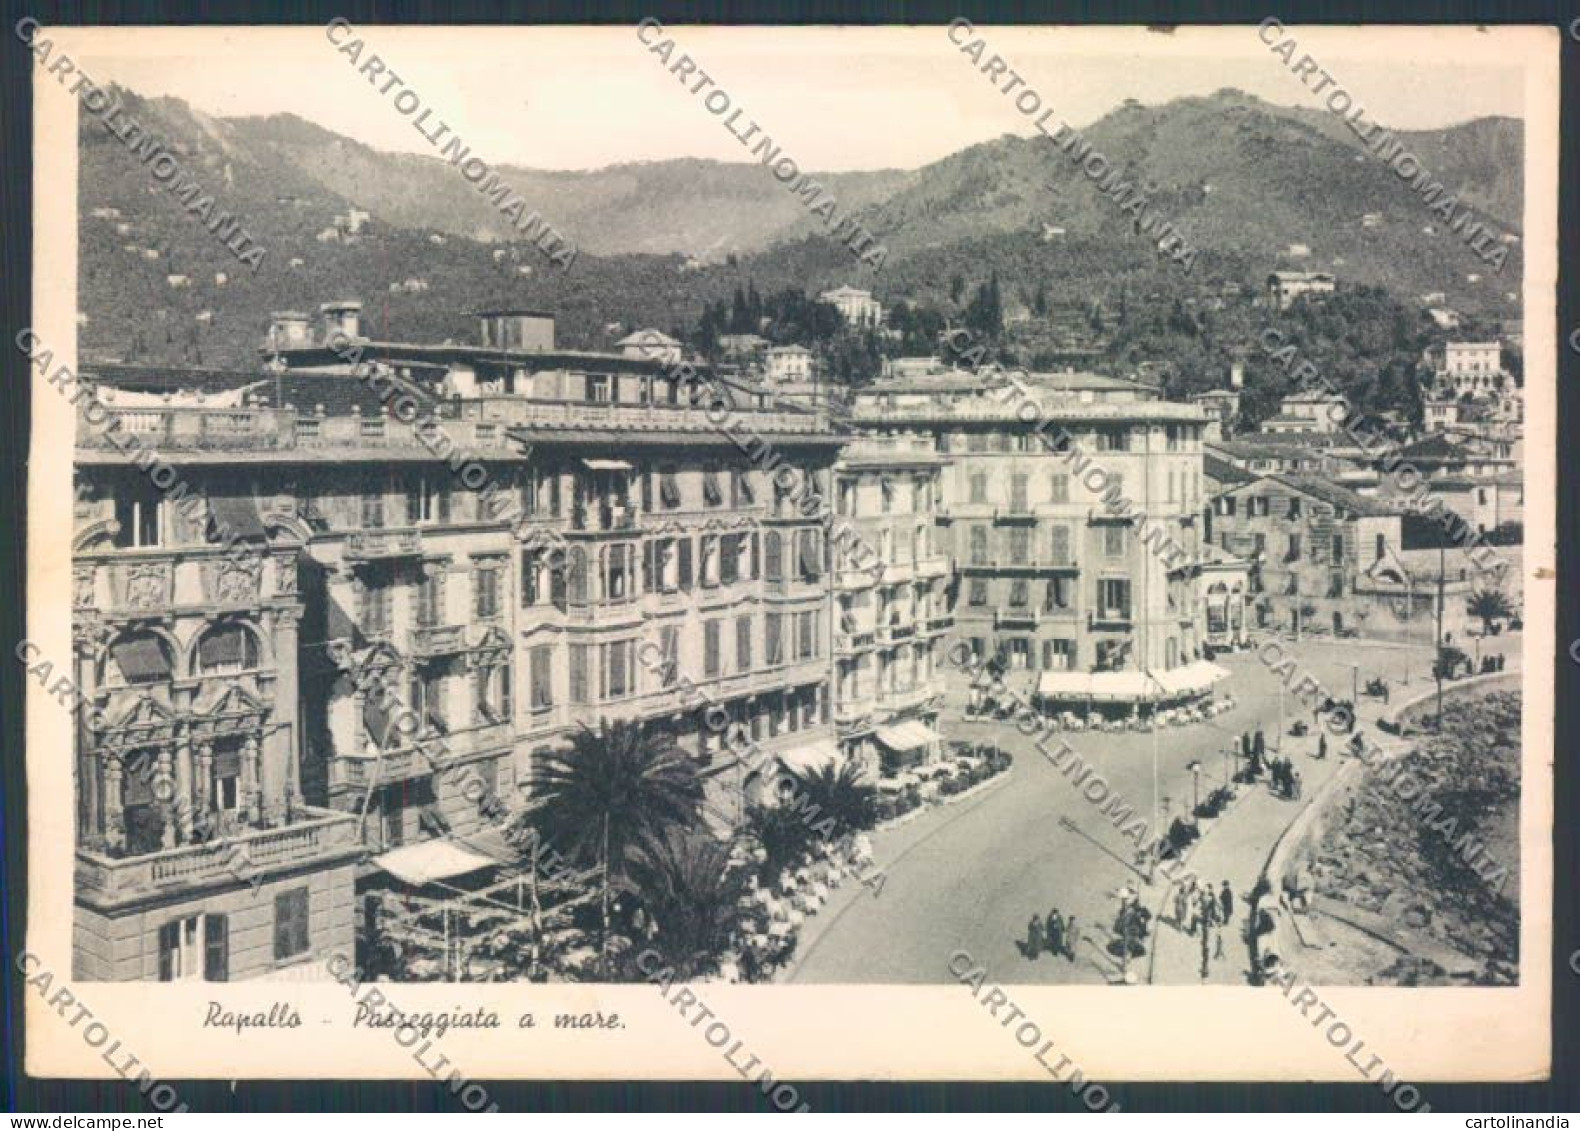 Genova Rapallo FG Cartolina ZF2678 - Genova (Genoa)